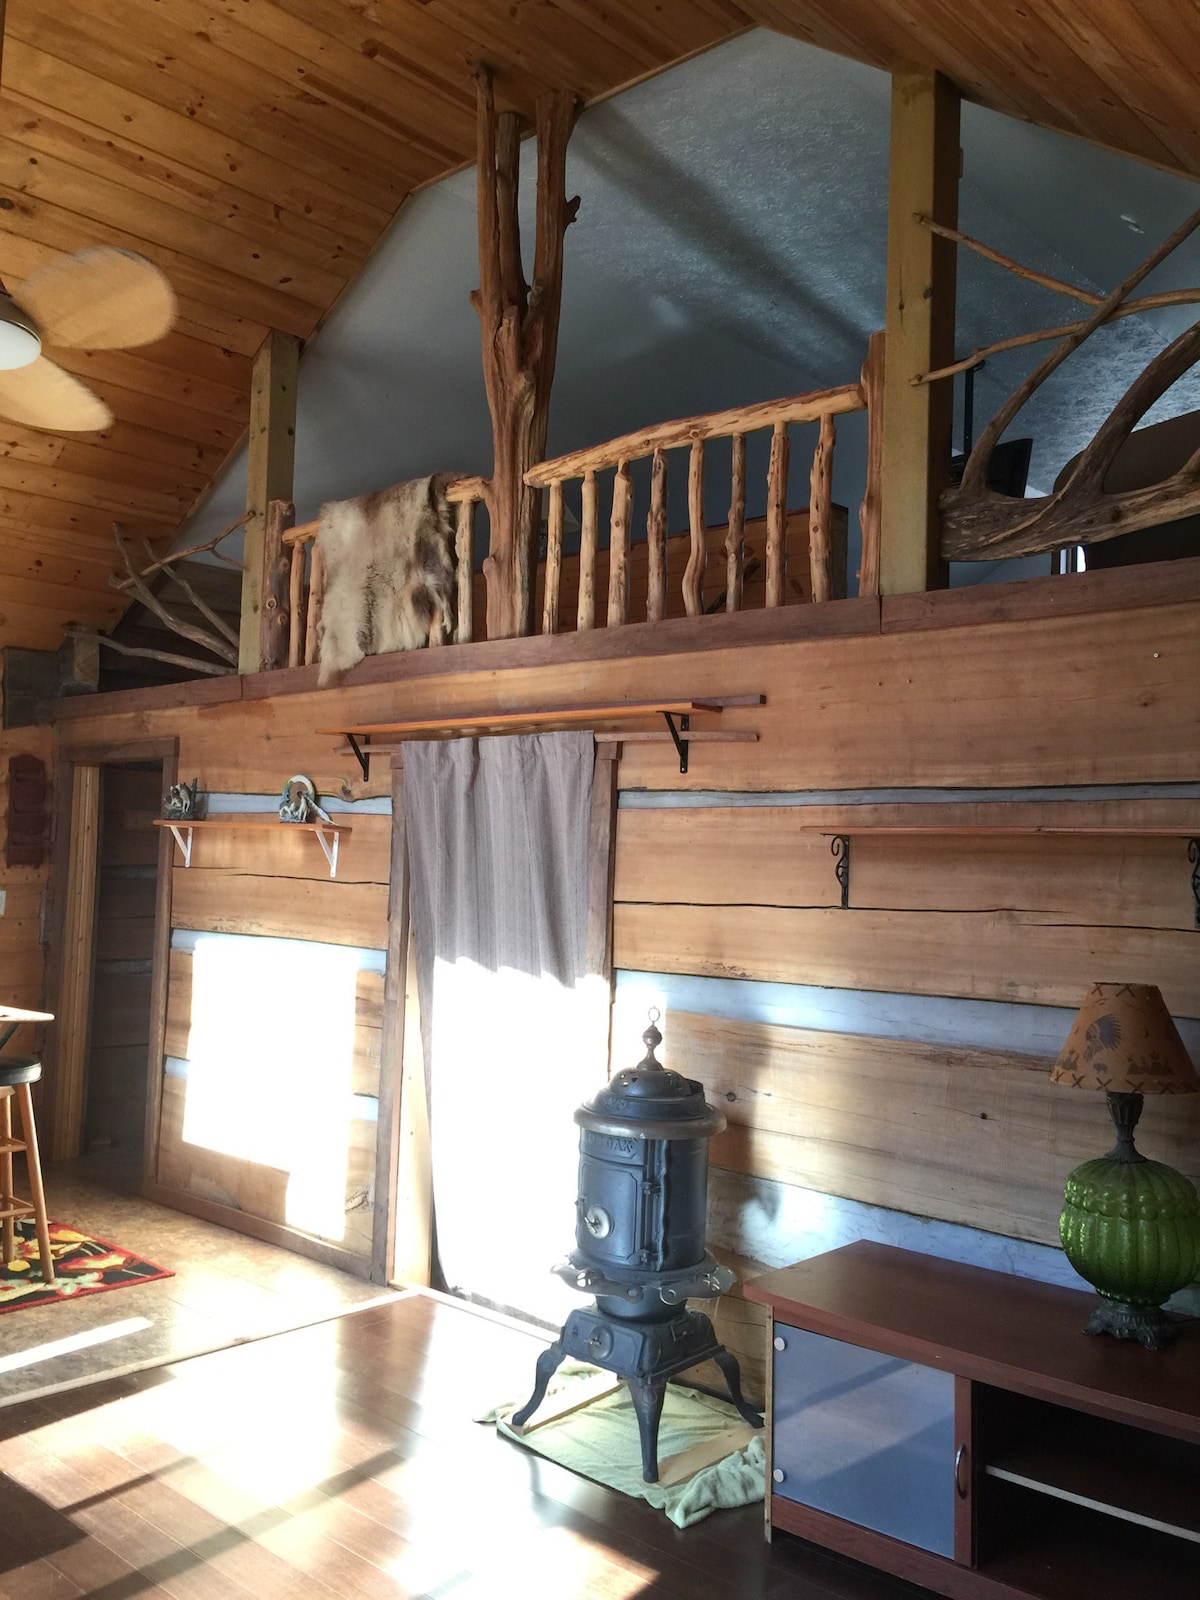 Grandpa 's Cabin at Heidenreich Hollow